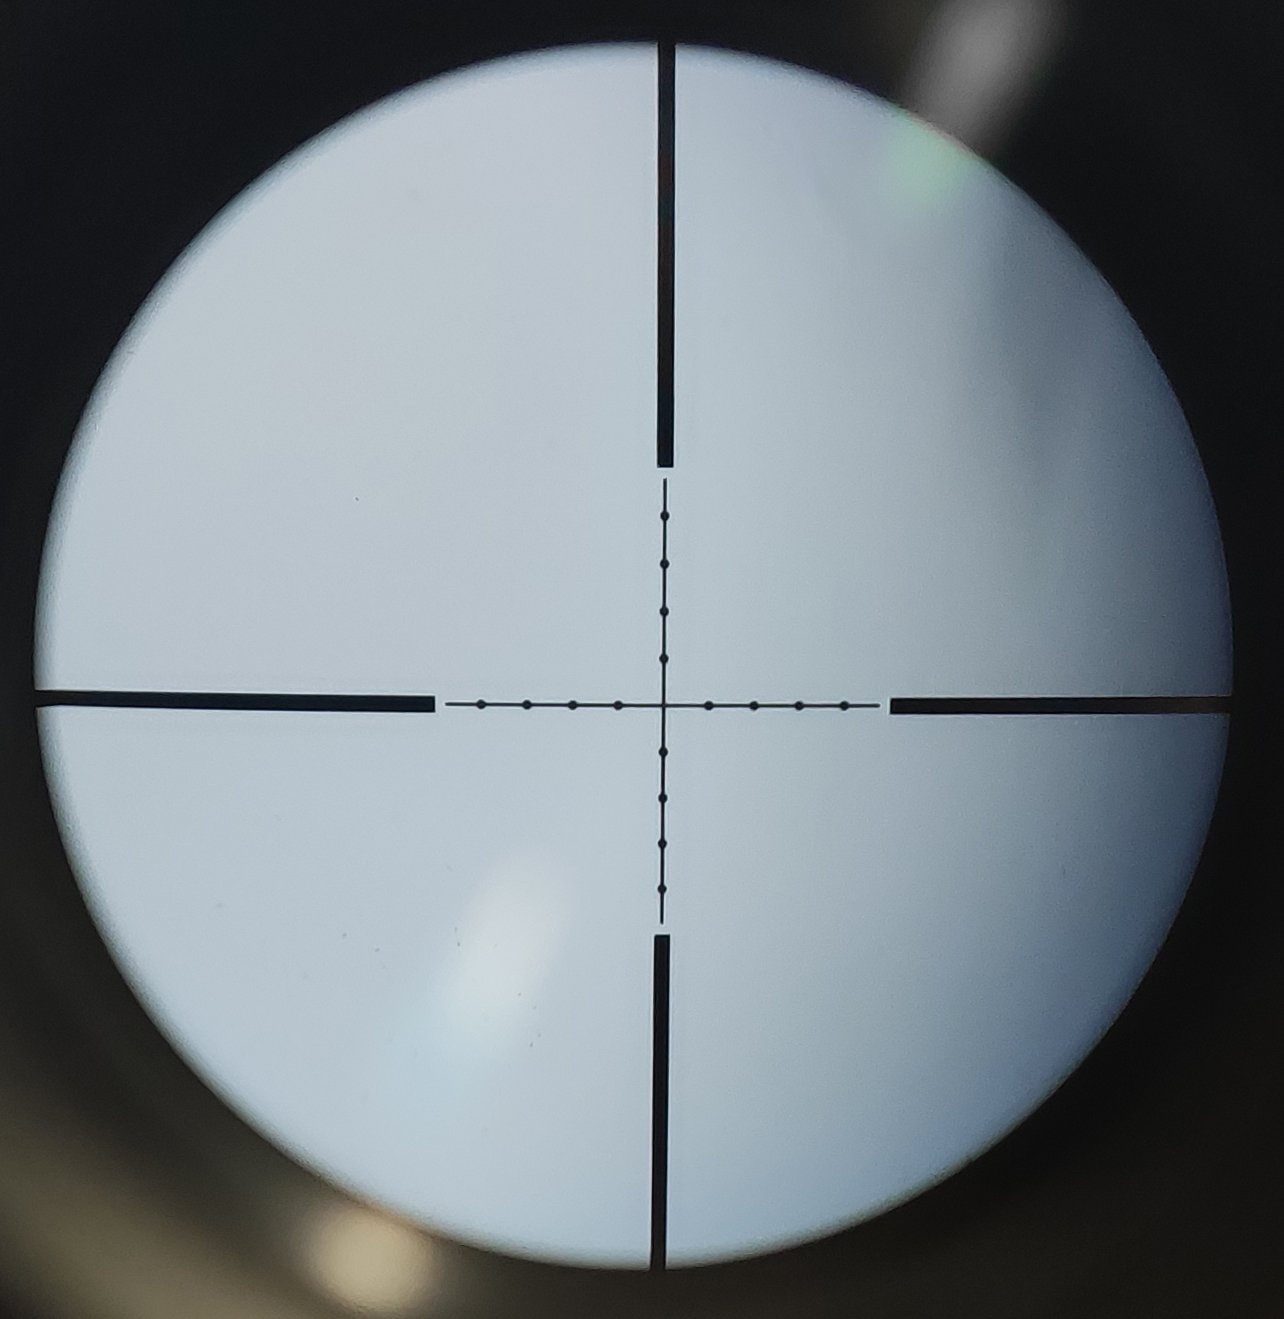 Delta Armory Riflescope 4x32 RGB Mil-Dot illuminated